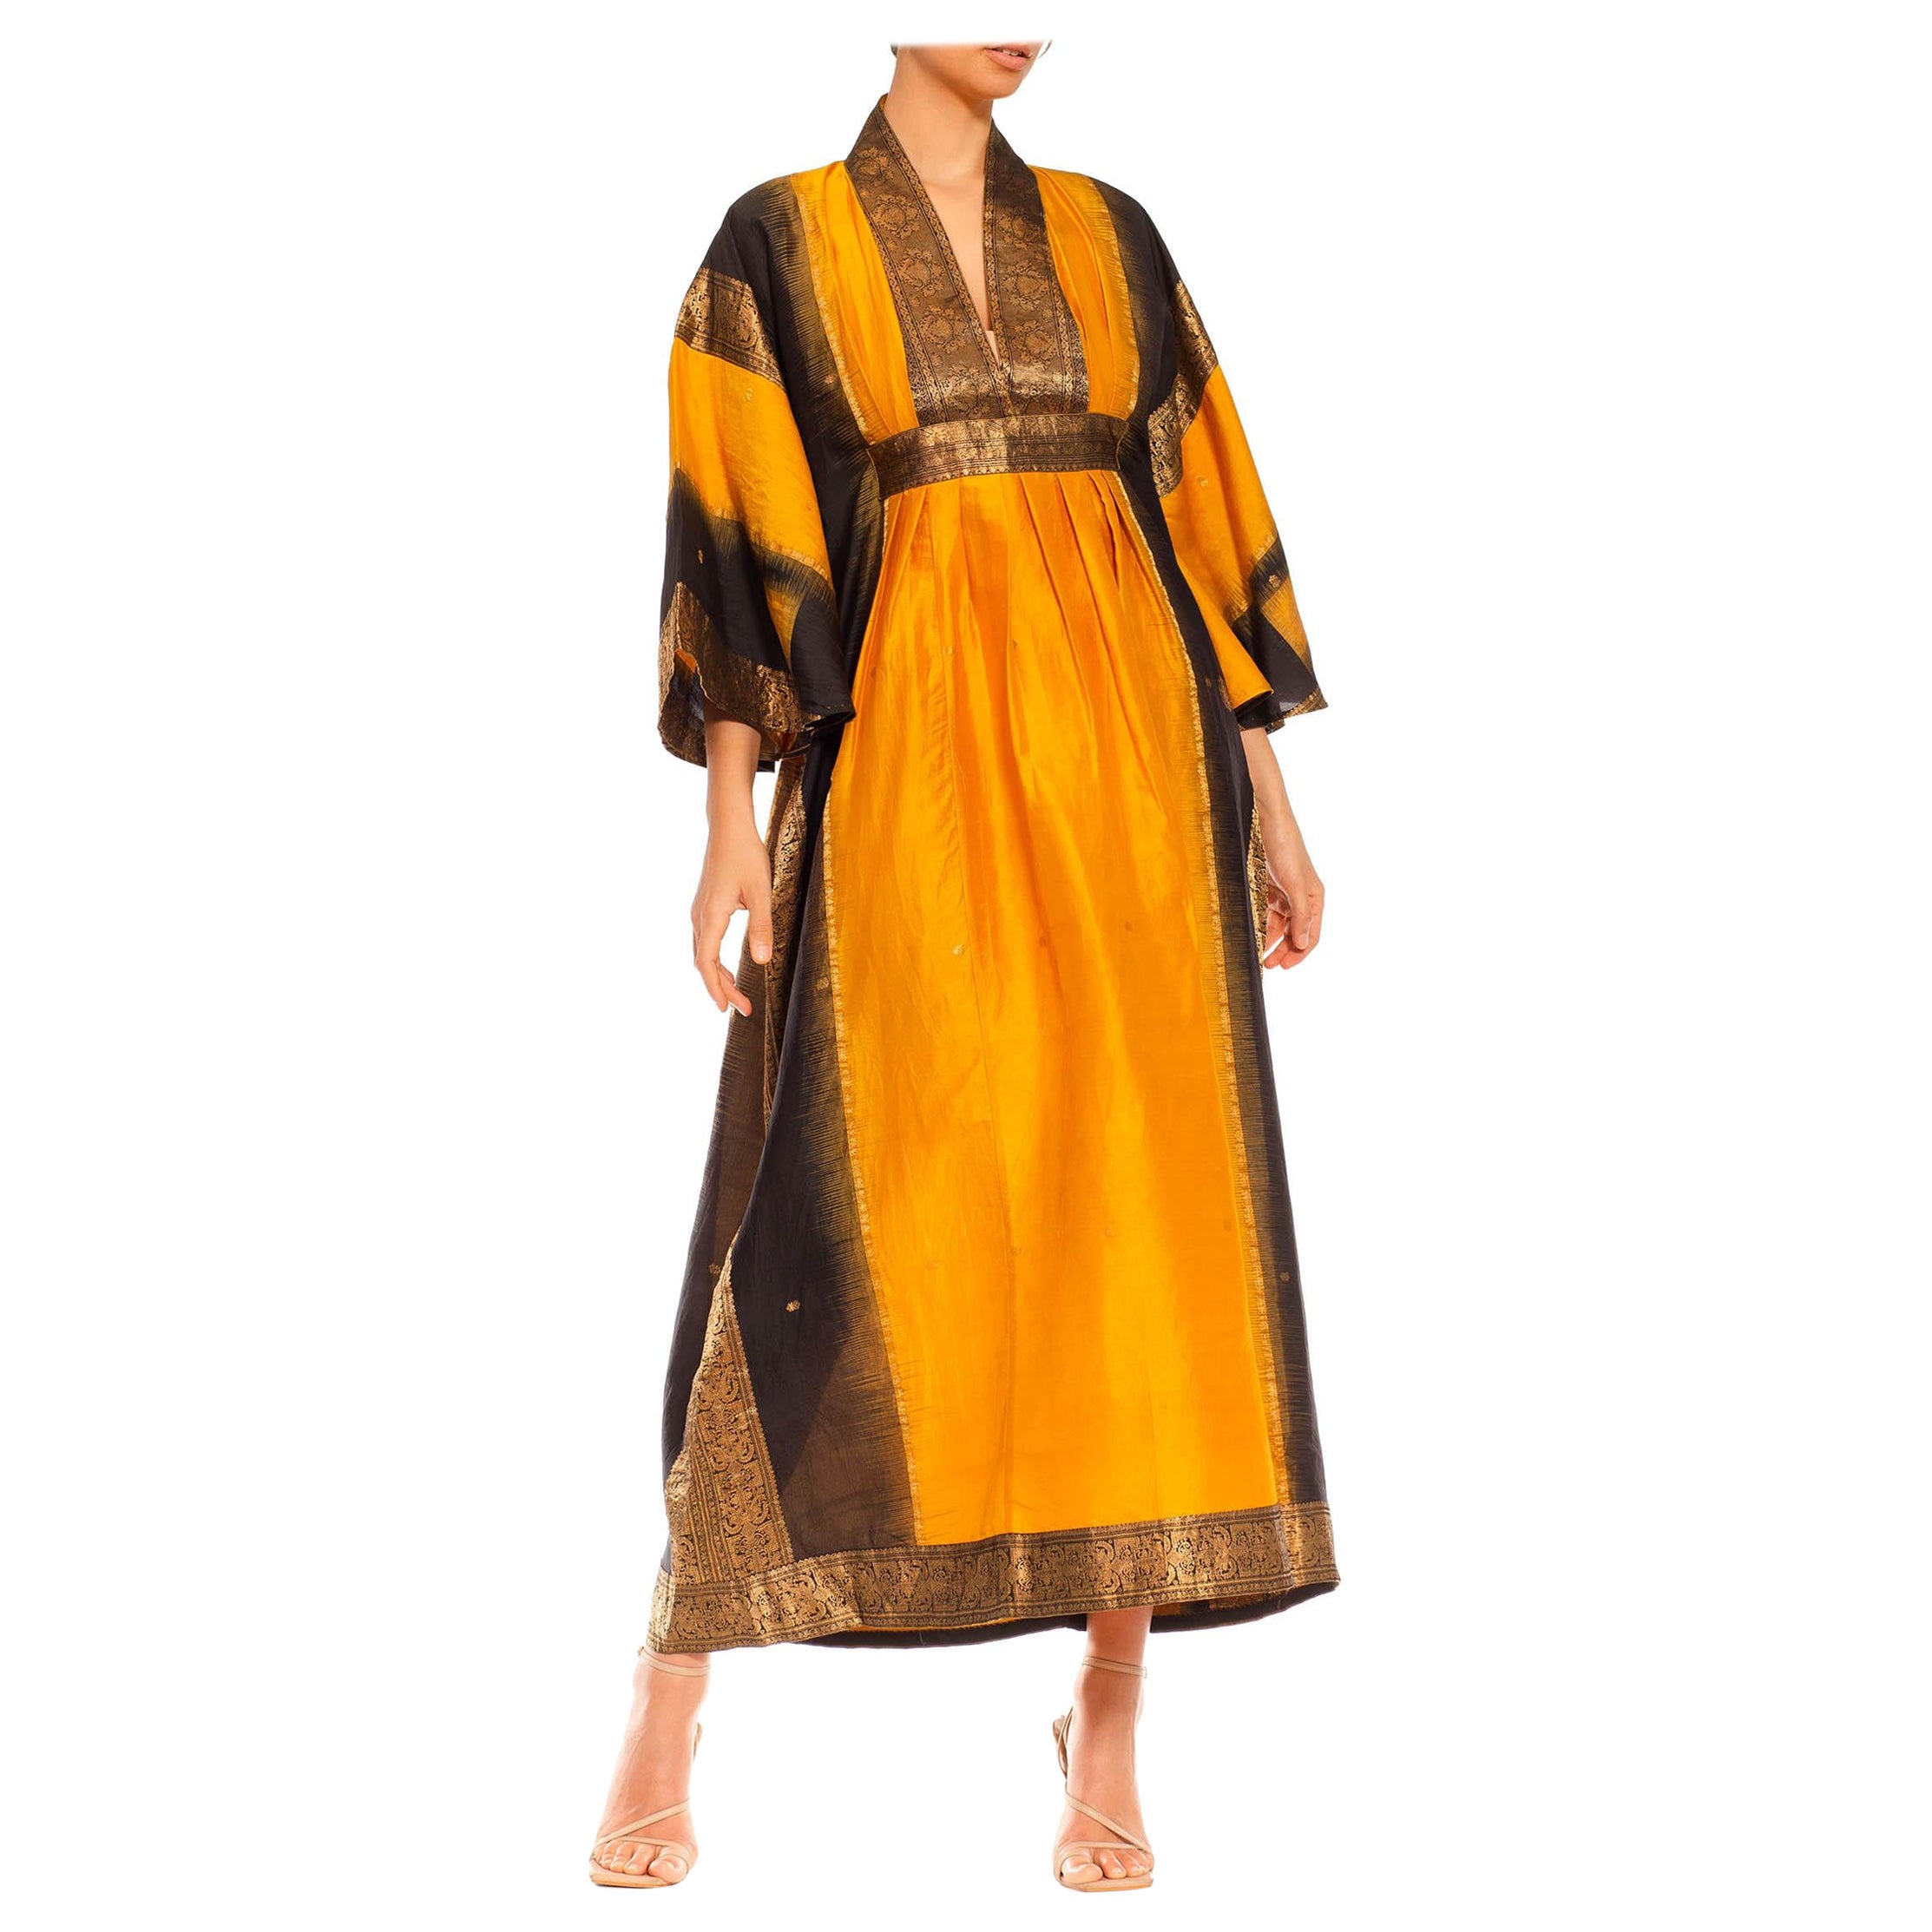 Morphew Collection Saffron, Black & Gold Silk Kaftan Made From Vintage Saris For Sale